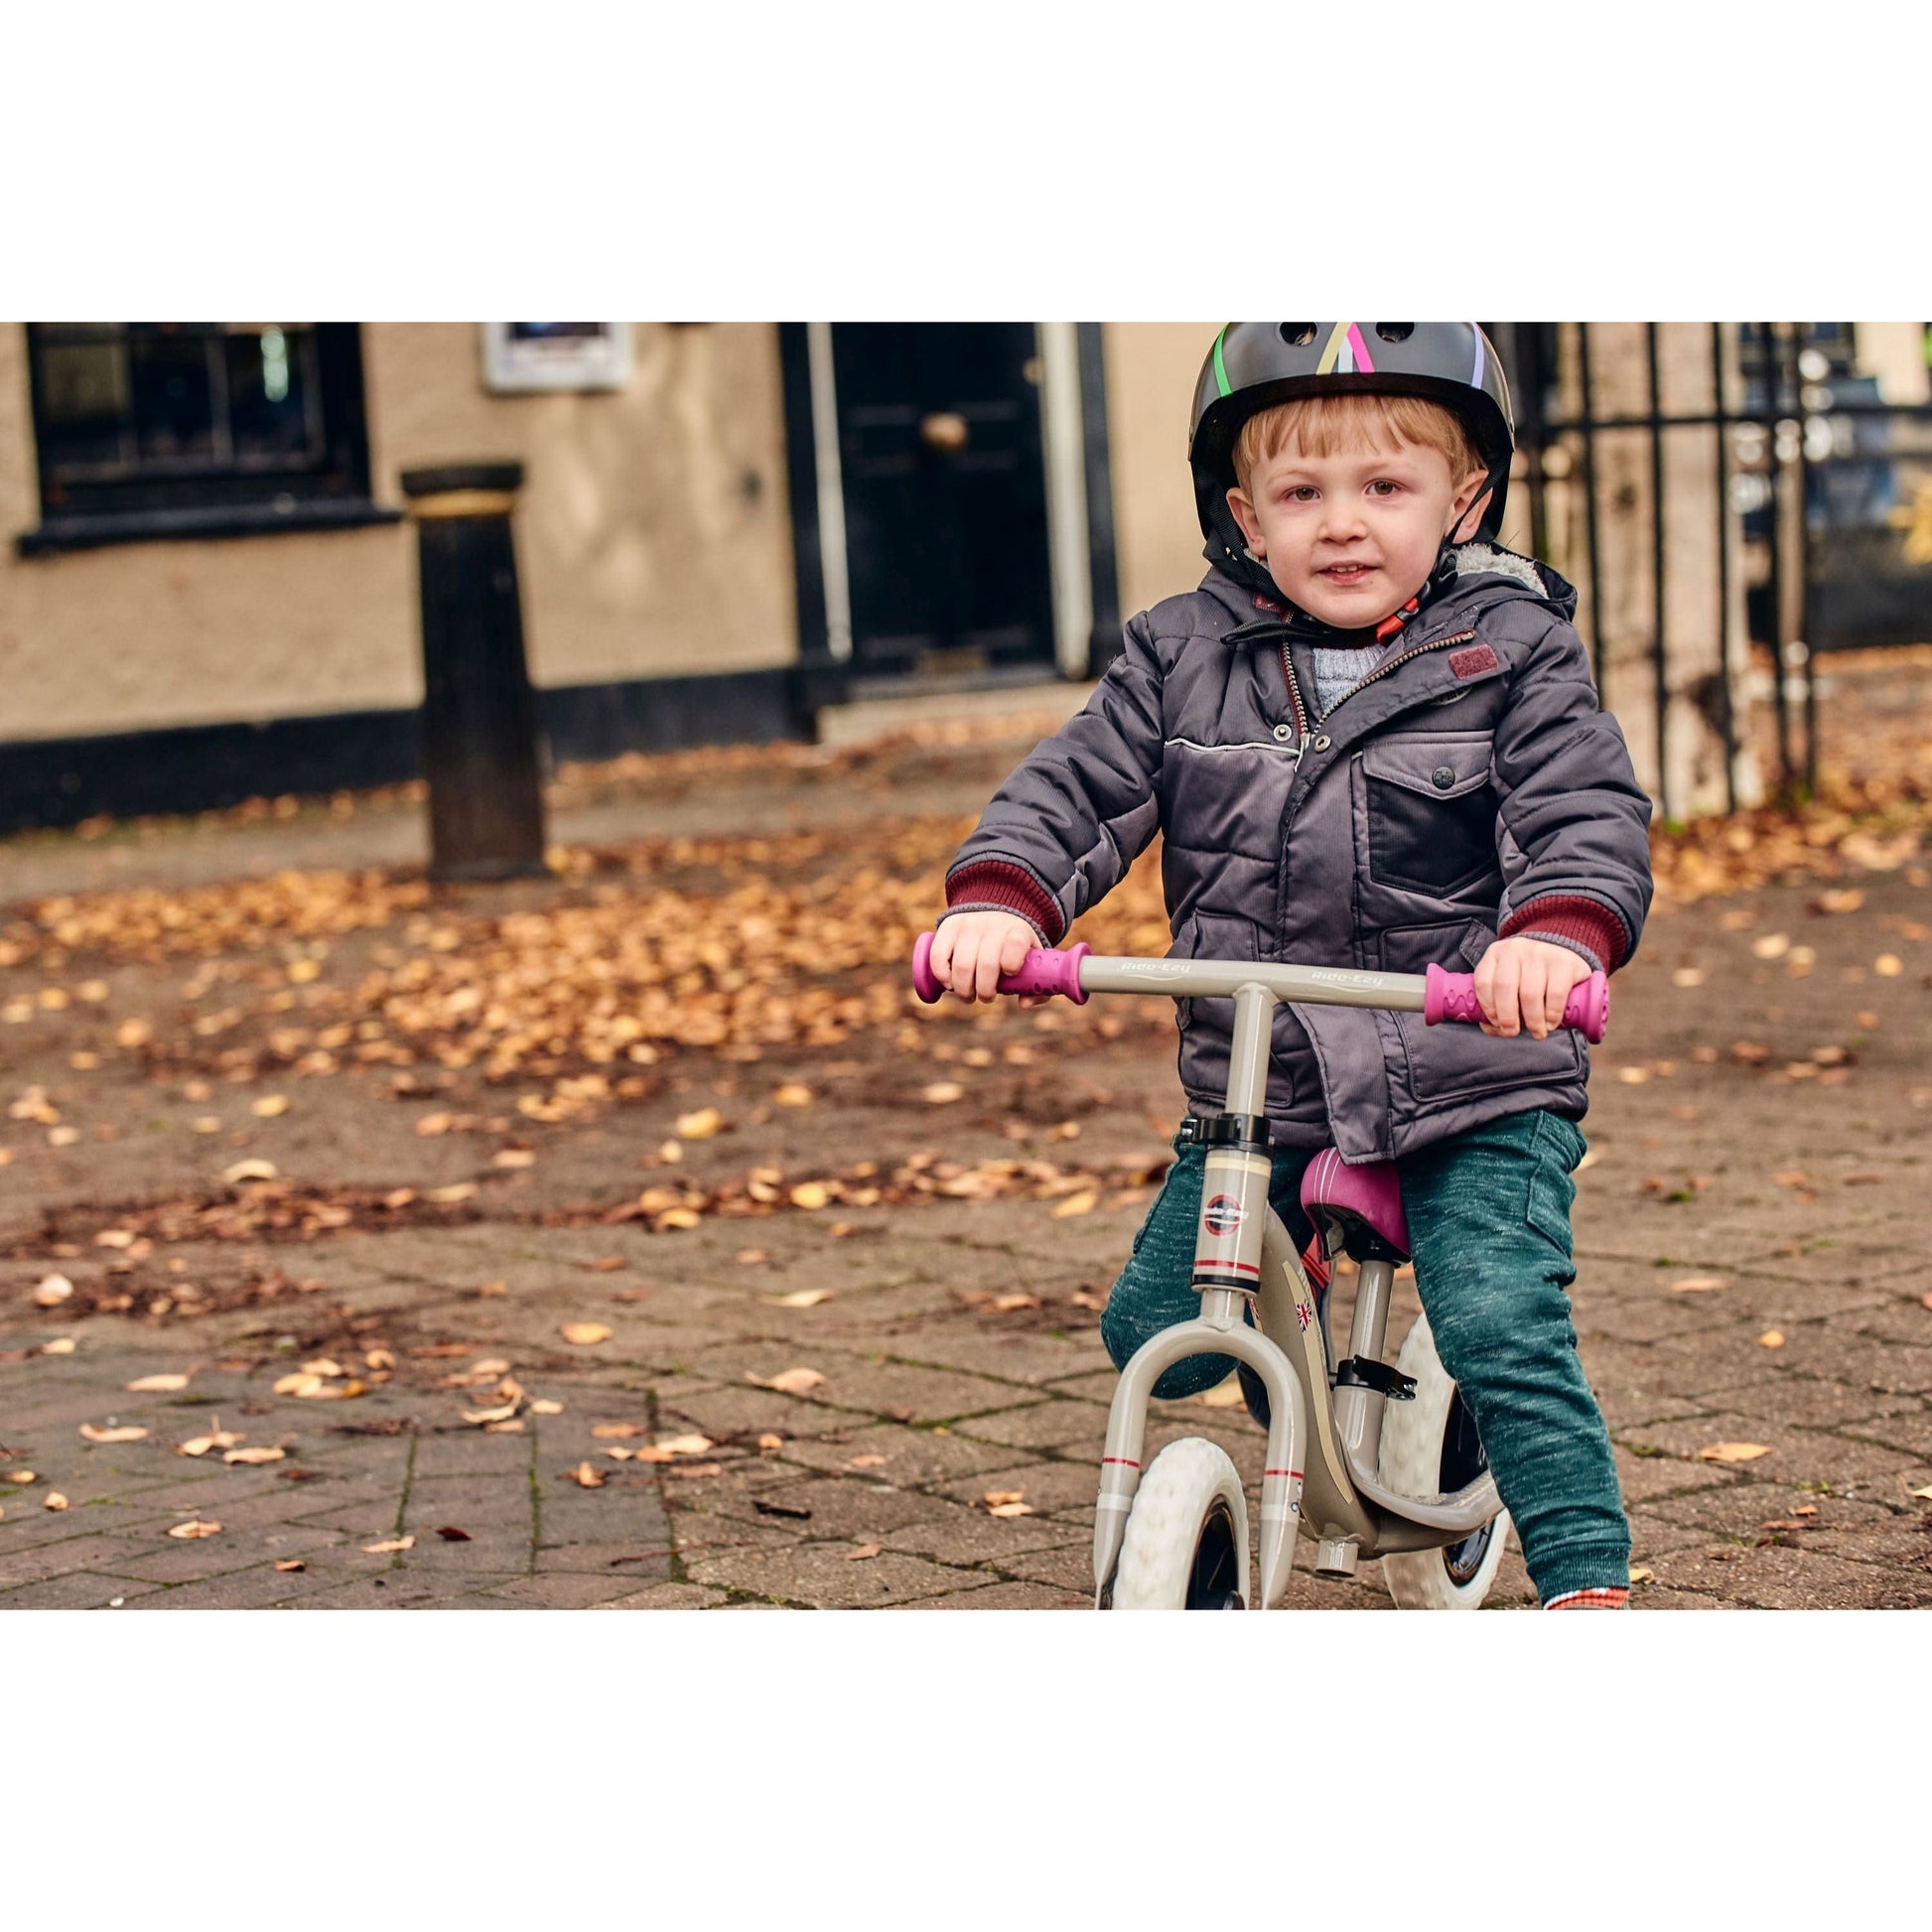 boy riding on Ride-Ezy Go Balance Bike - Pink & Silver on pavement